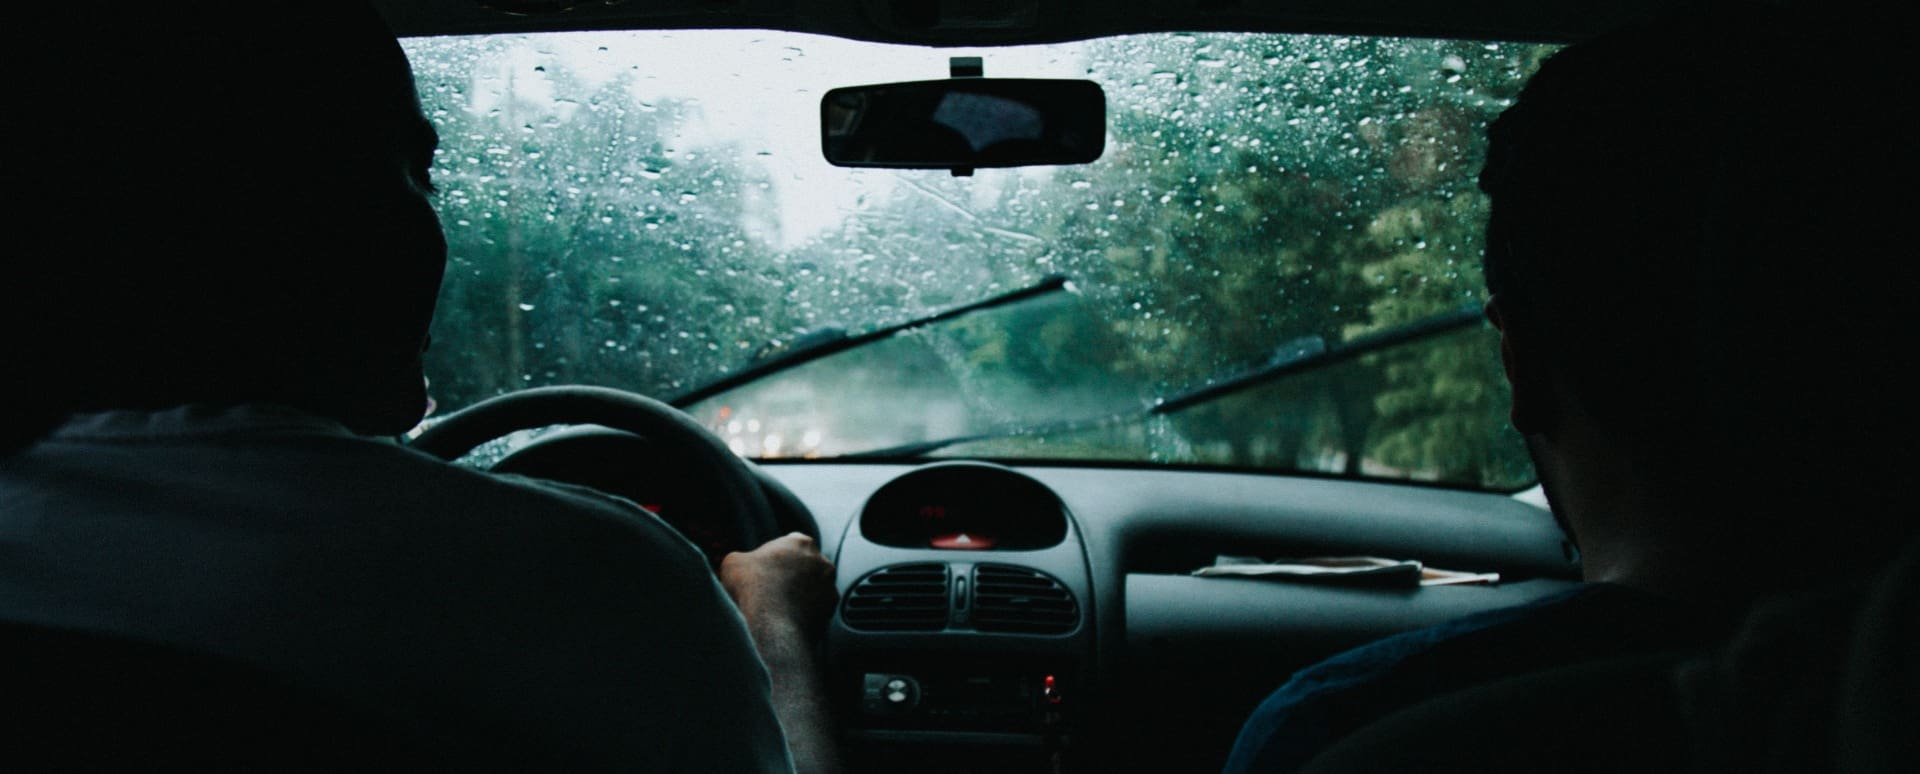 Rainy Windscreen From Inside Car